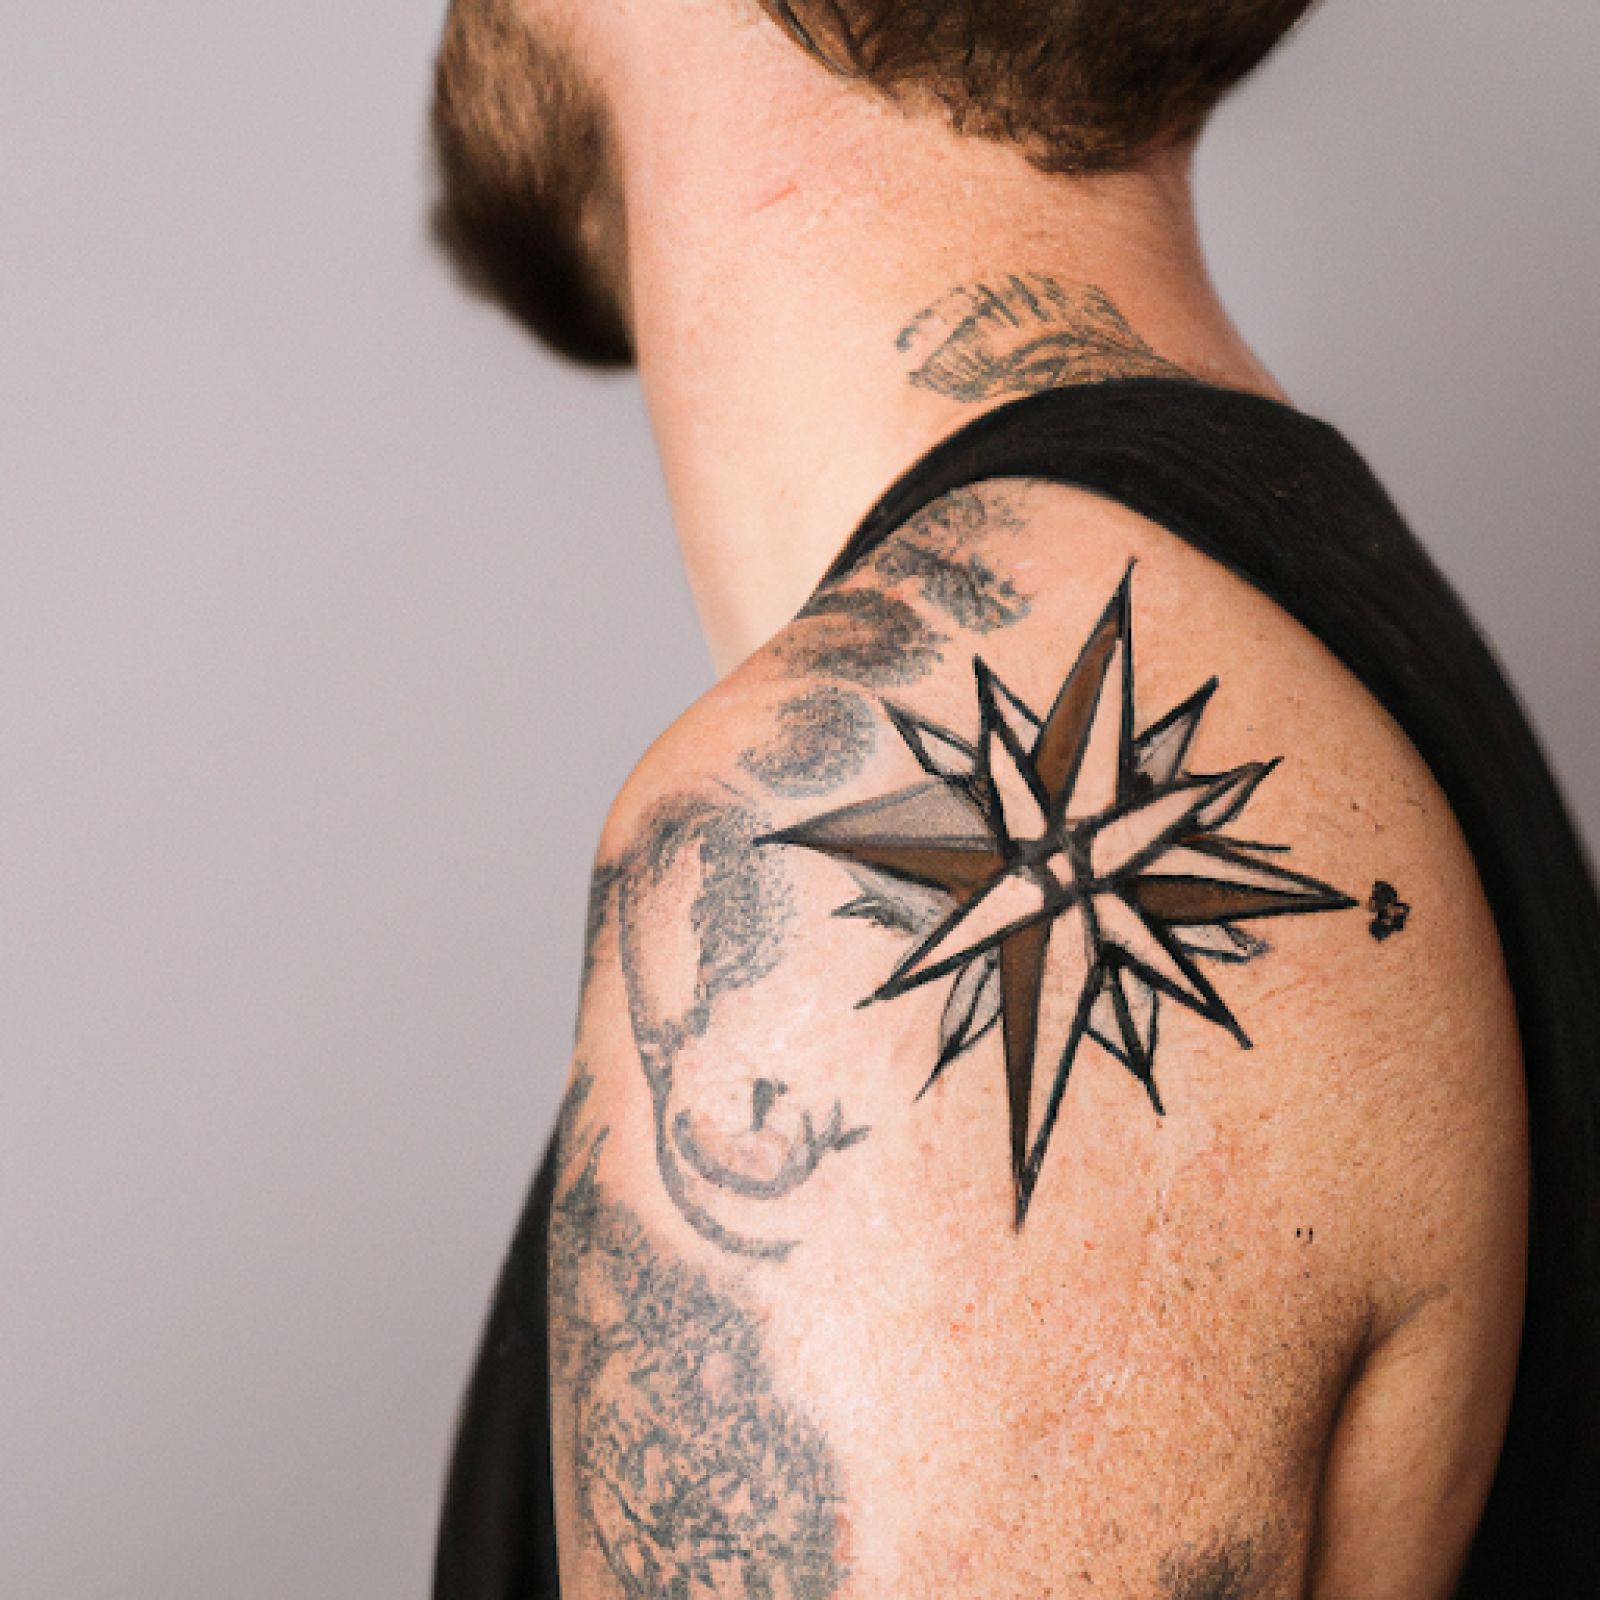 Compass tattoo on shoulder for men